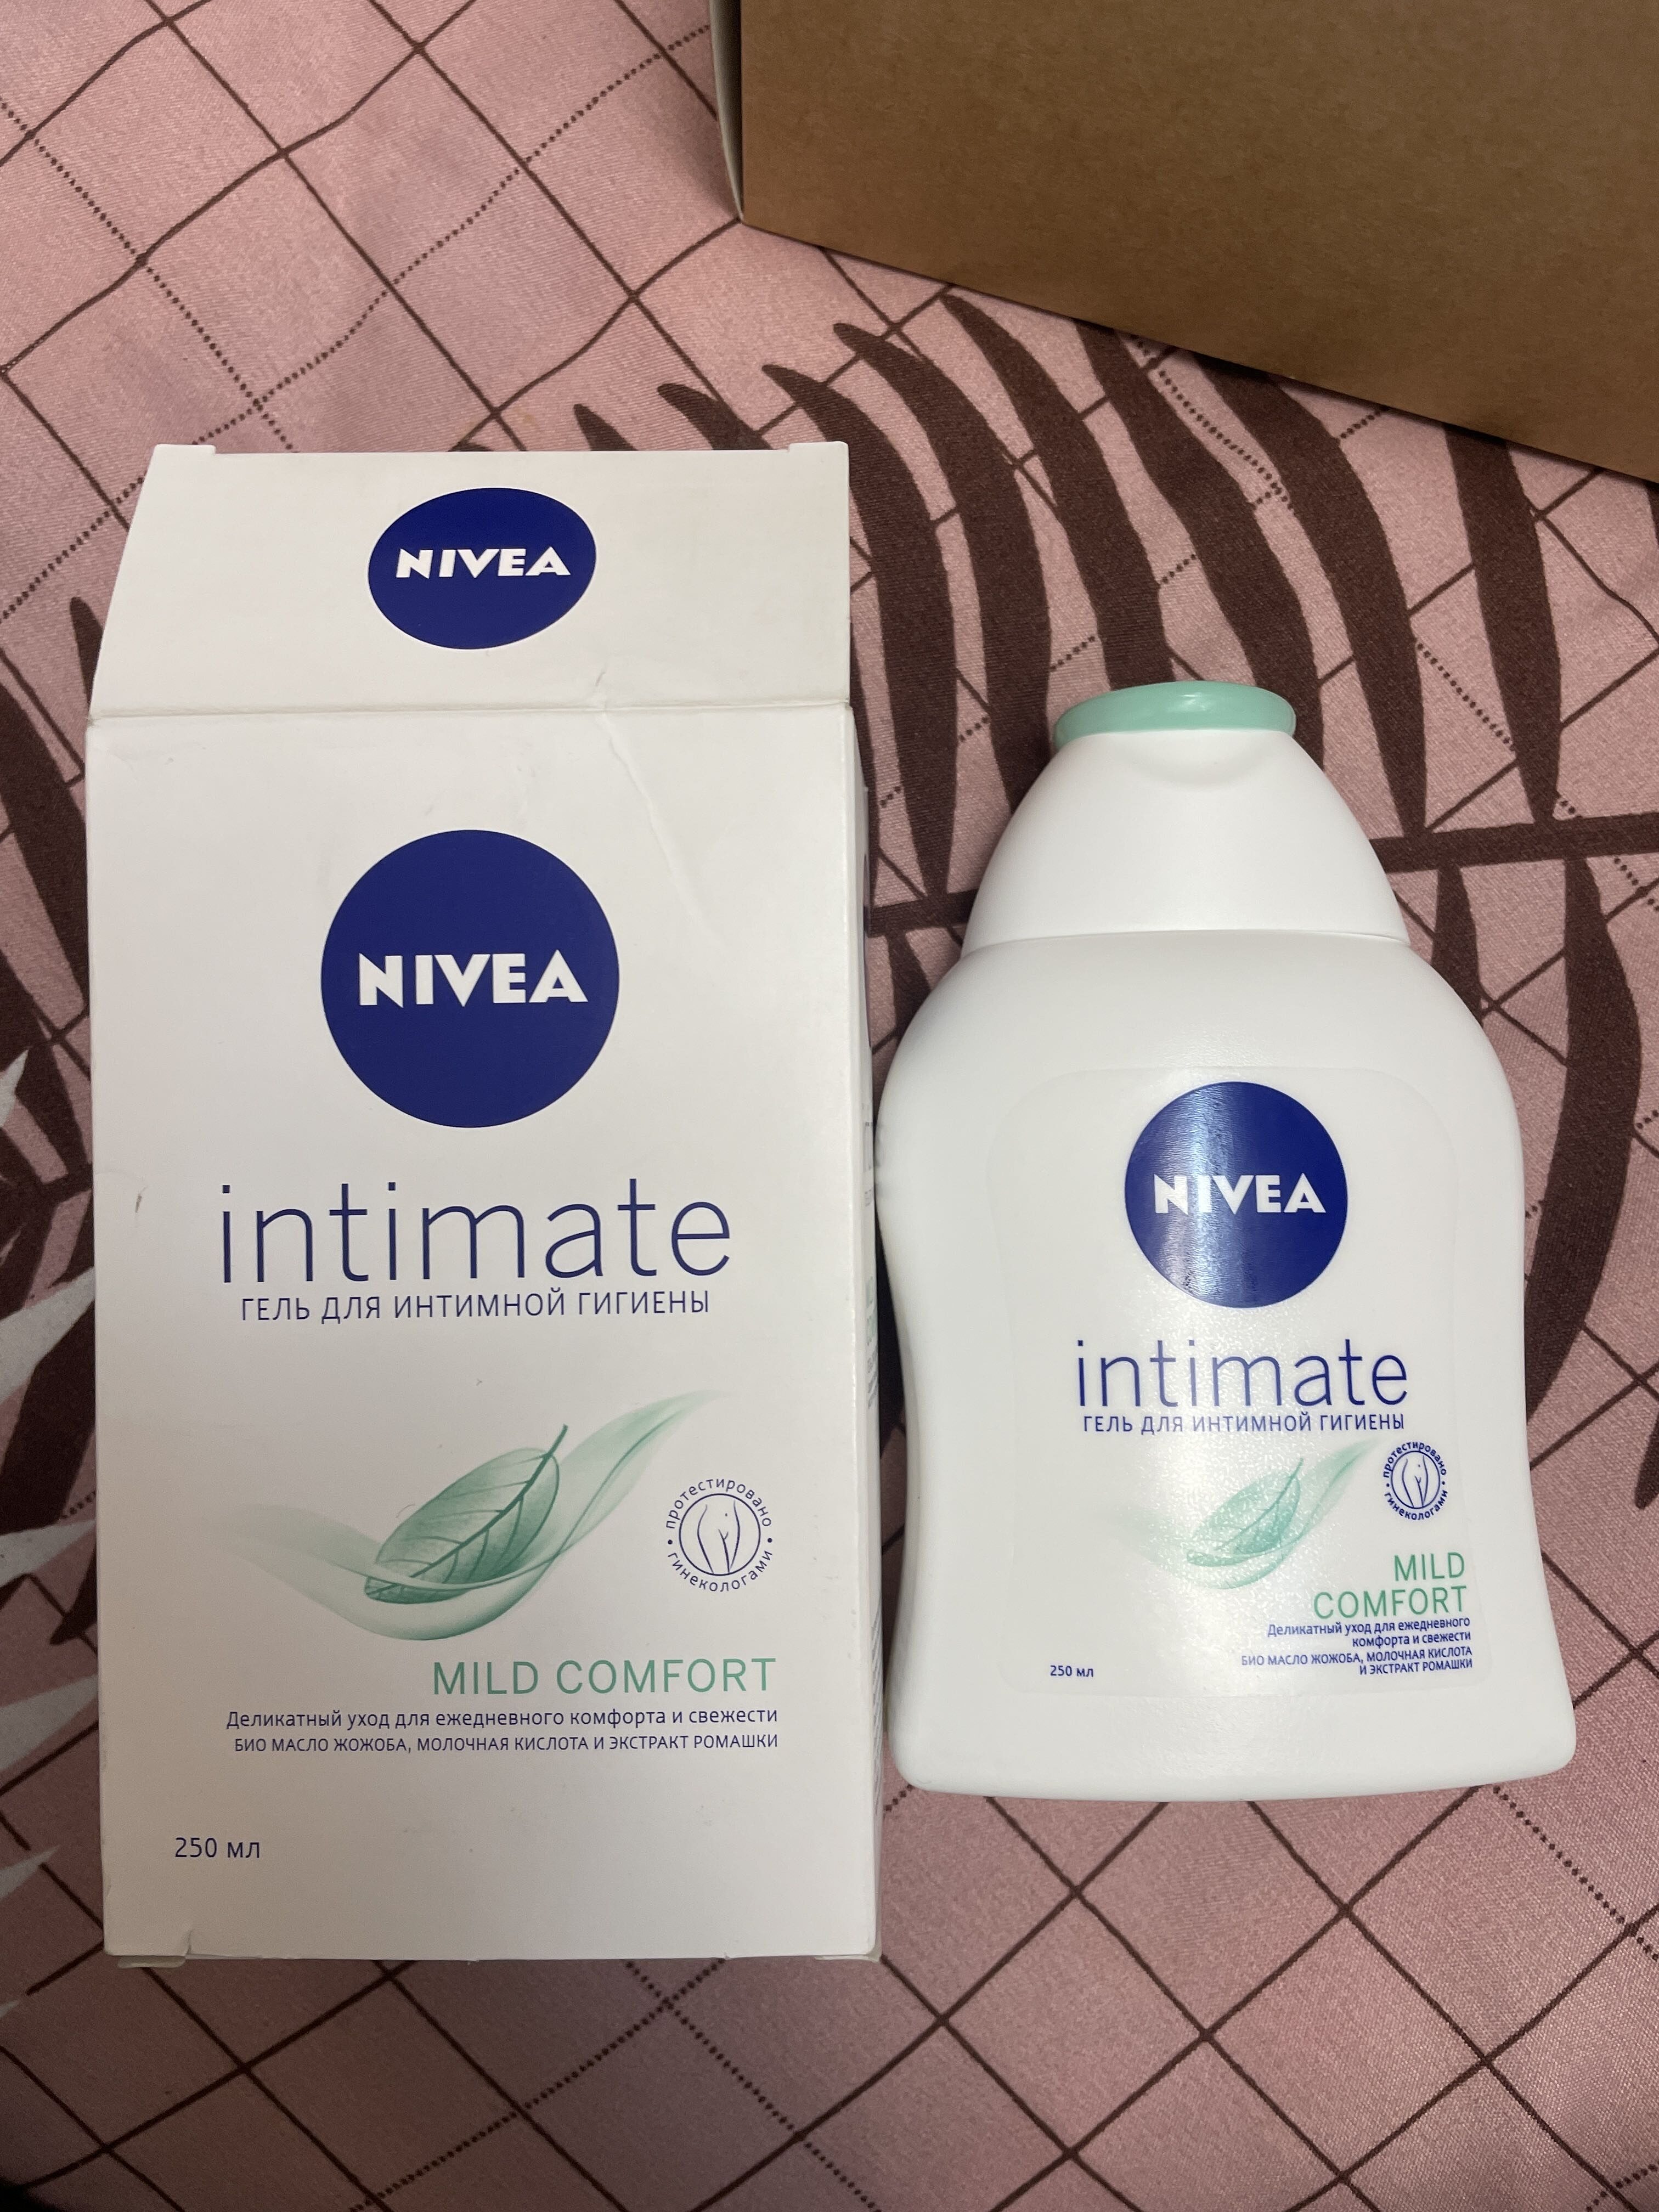 Intimate - Product - en